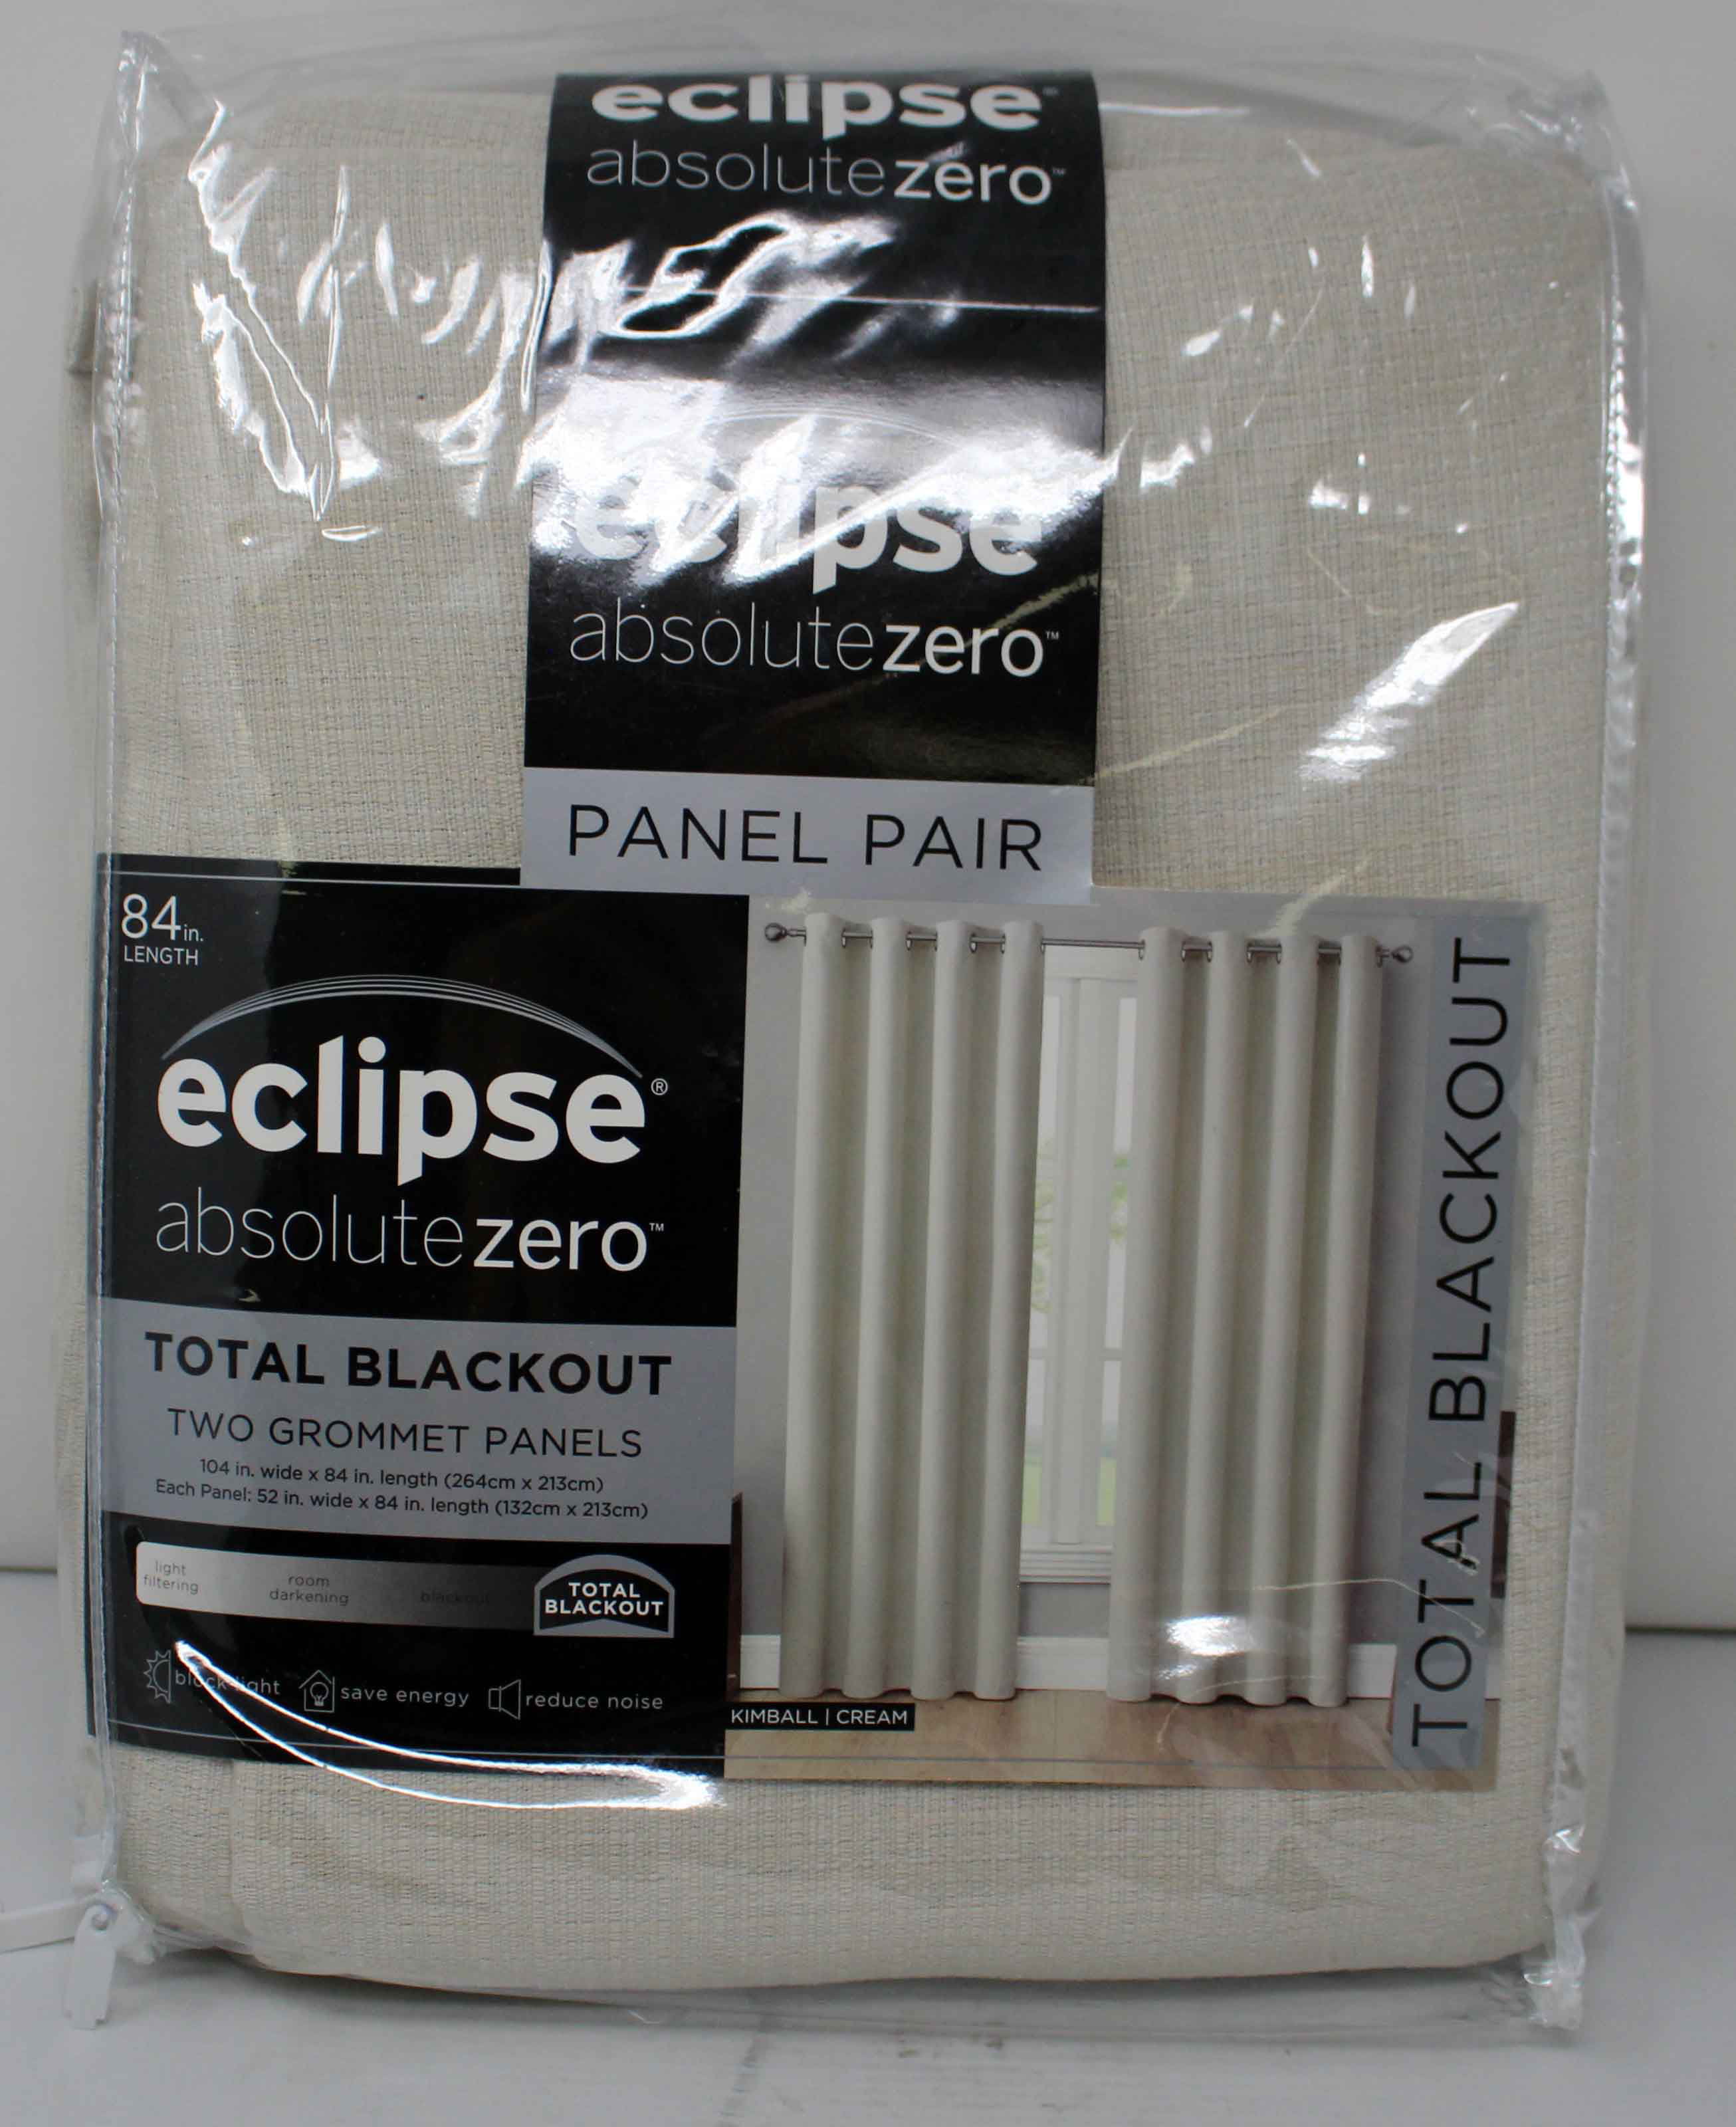 Eclipse Absolute Zero Panel Pair Cream - Walmart.com - Walmart.com